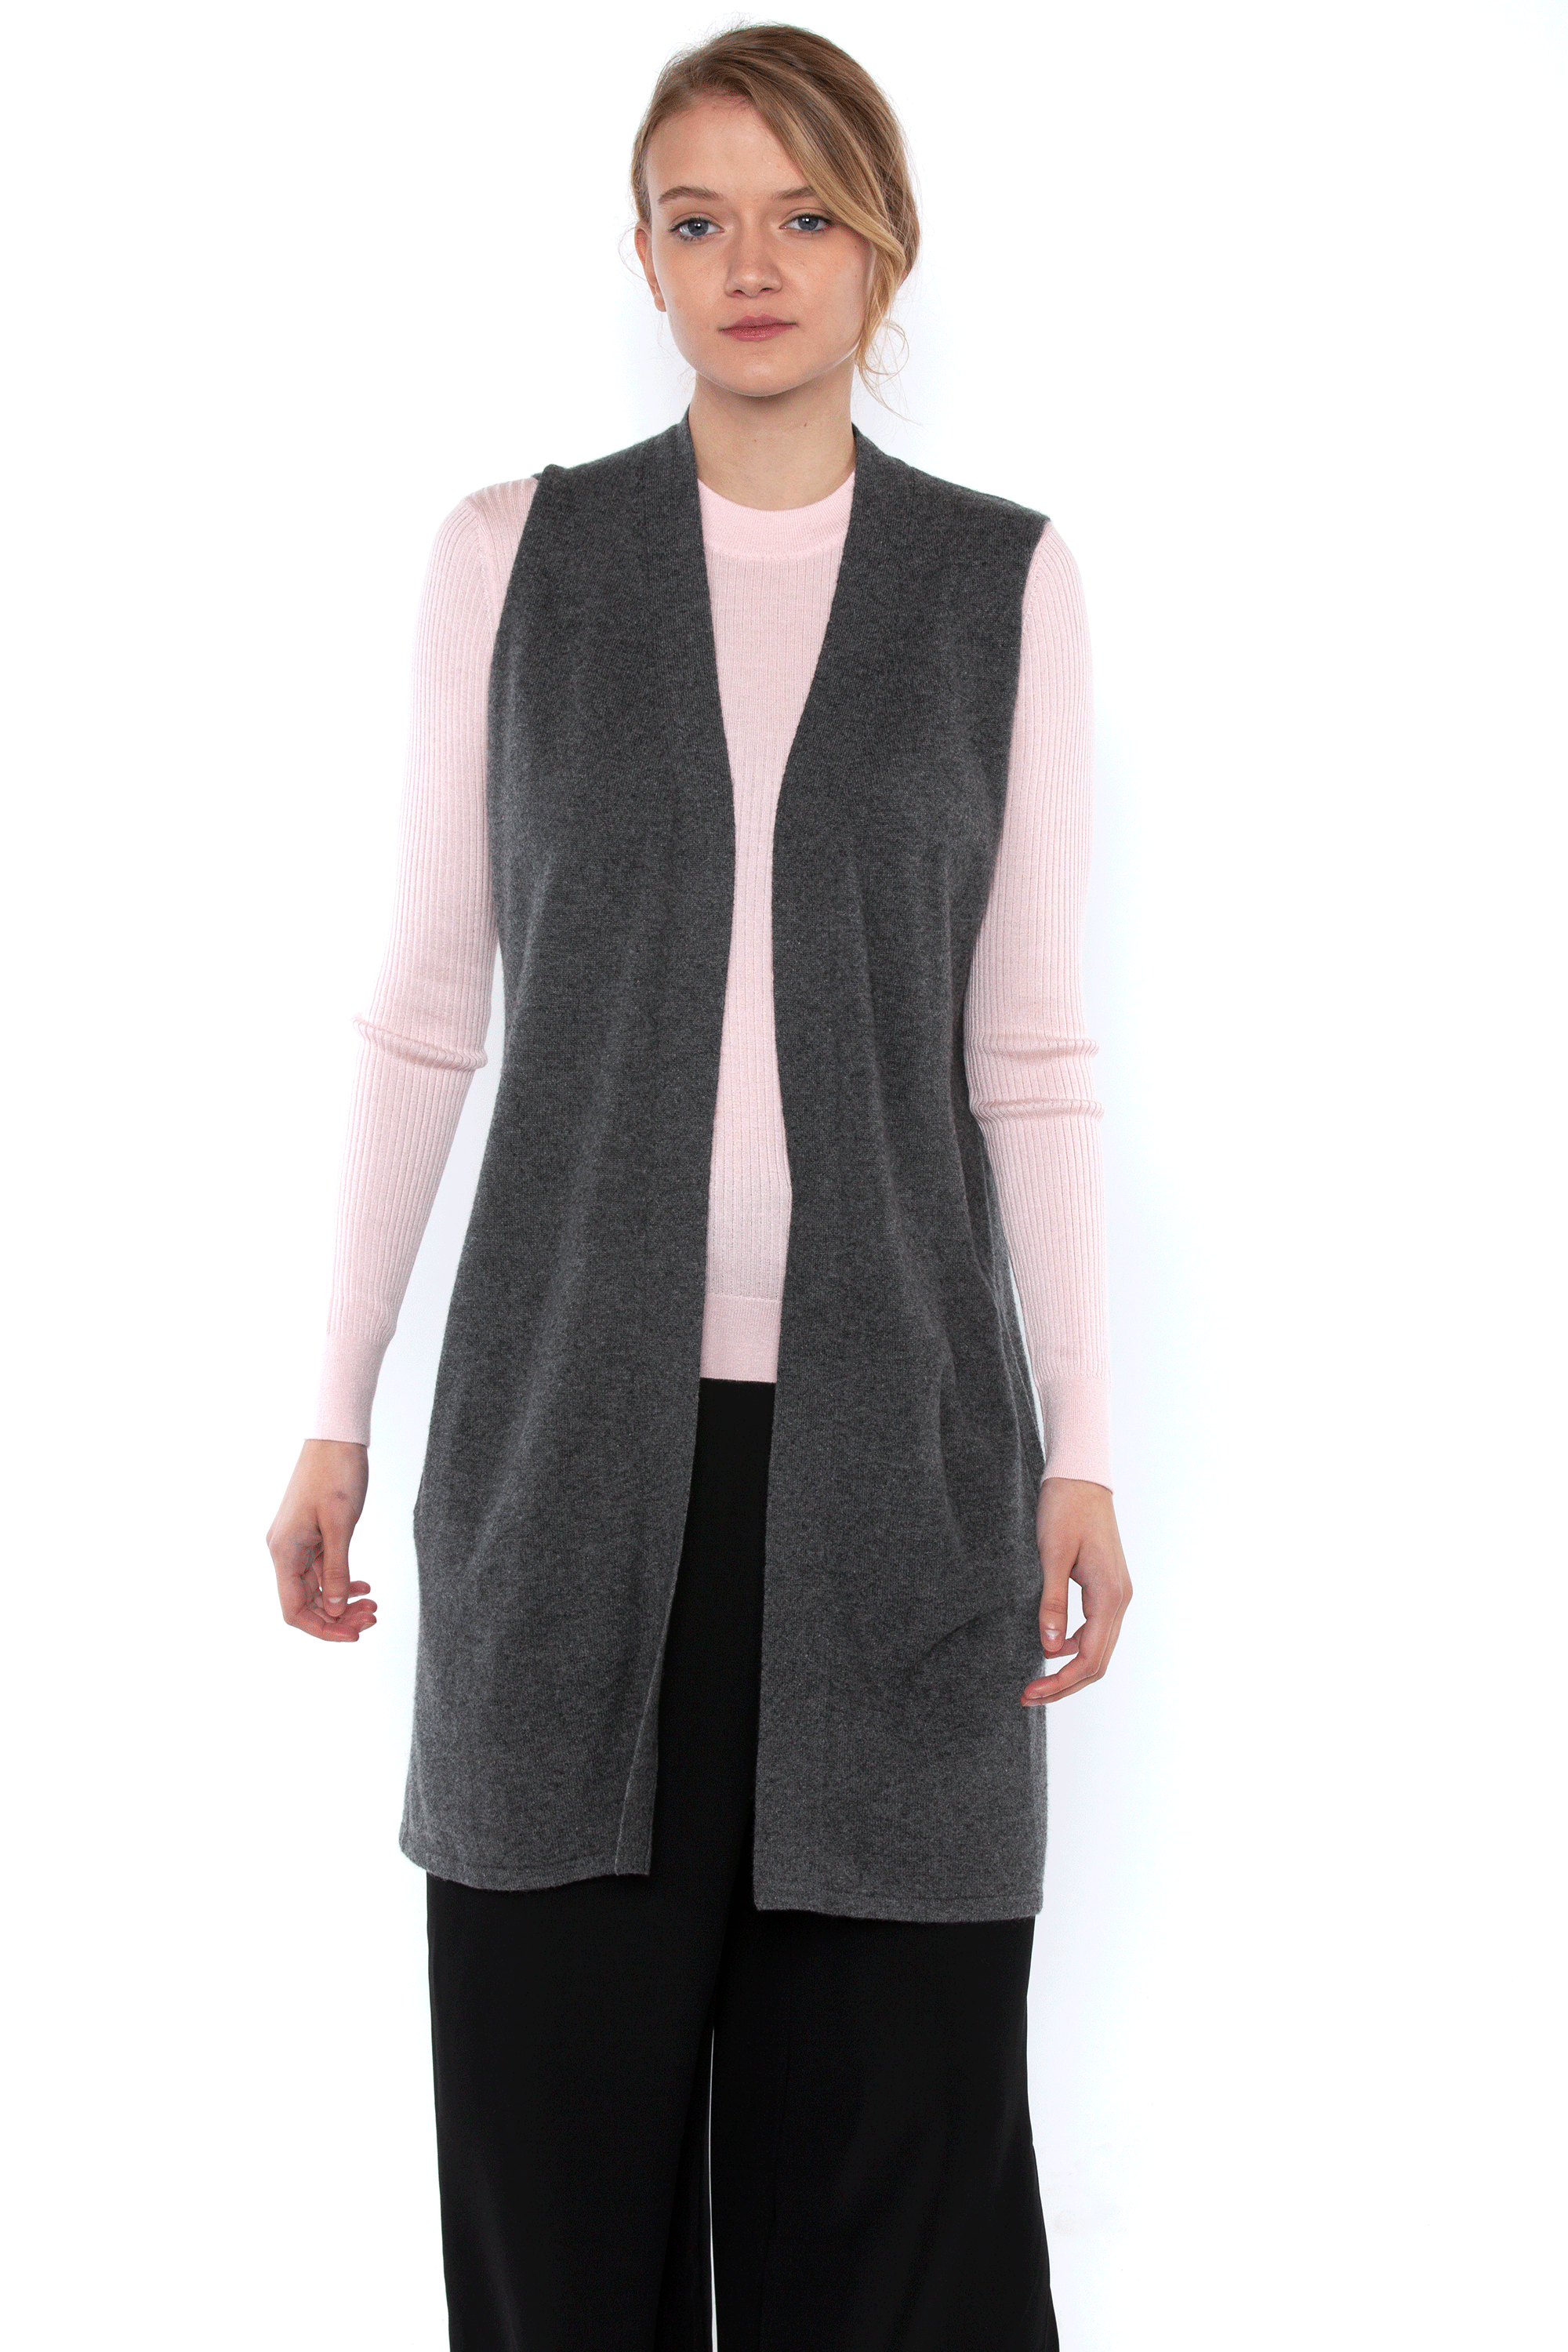 JENNIE LIU Womens 100% Pure Cashmere Sleeveless Cardigan Sweater Duster Vest  - J CASHMERE